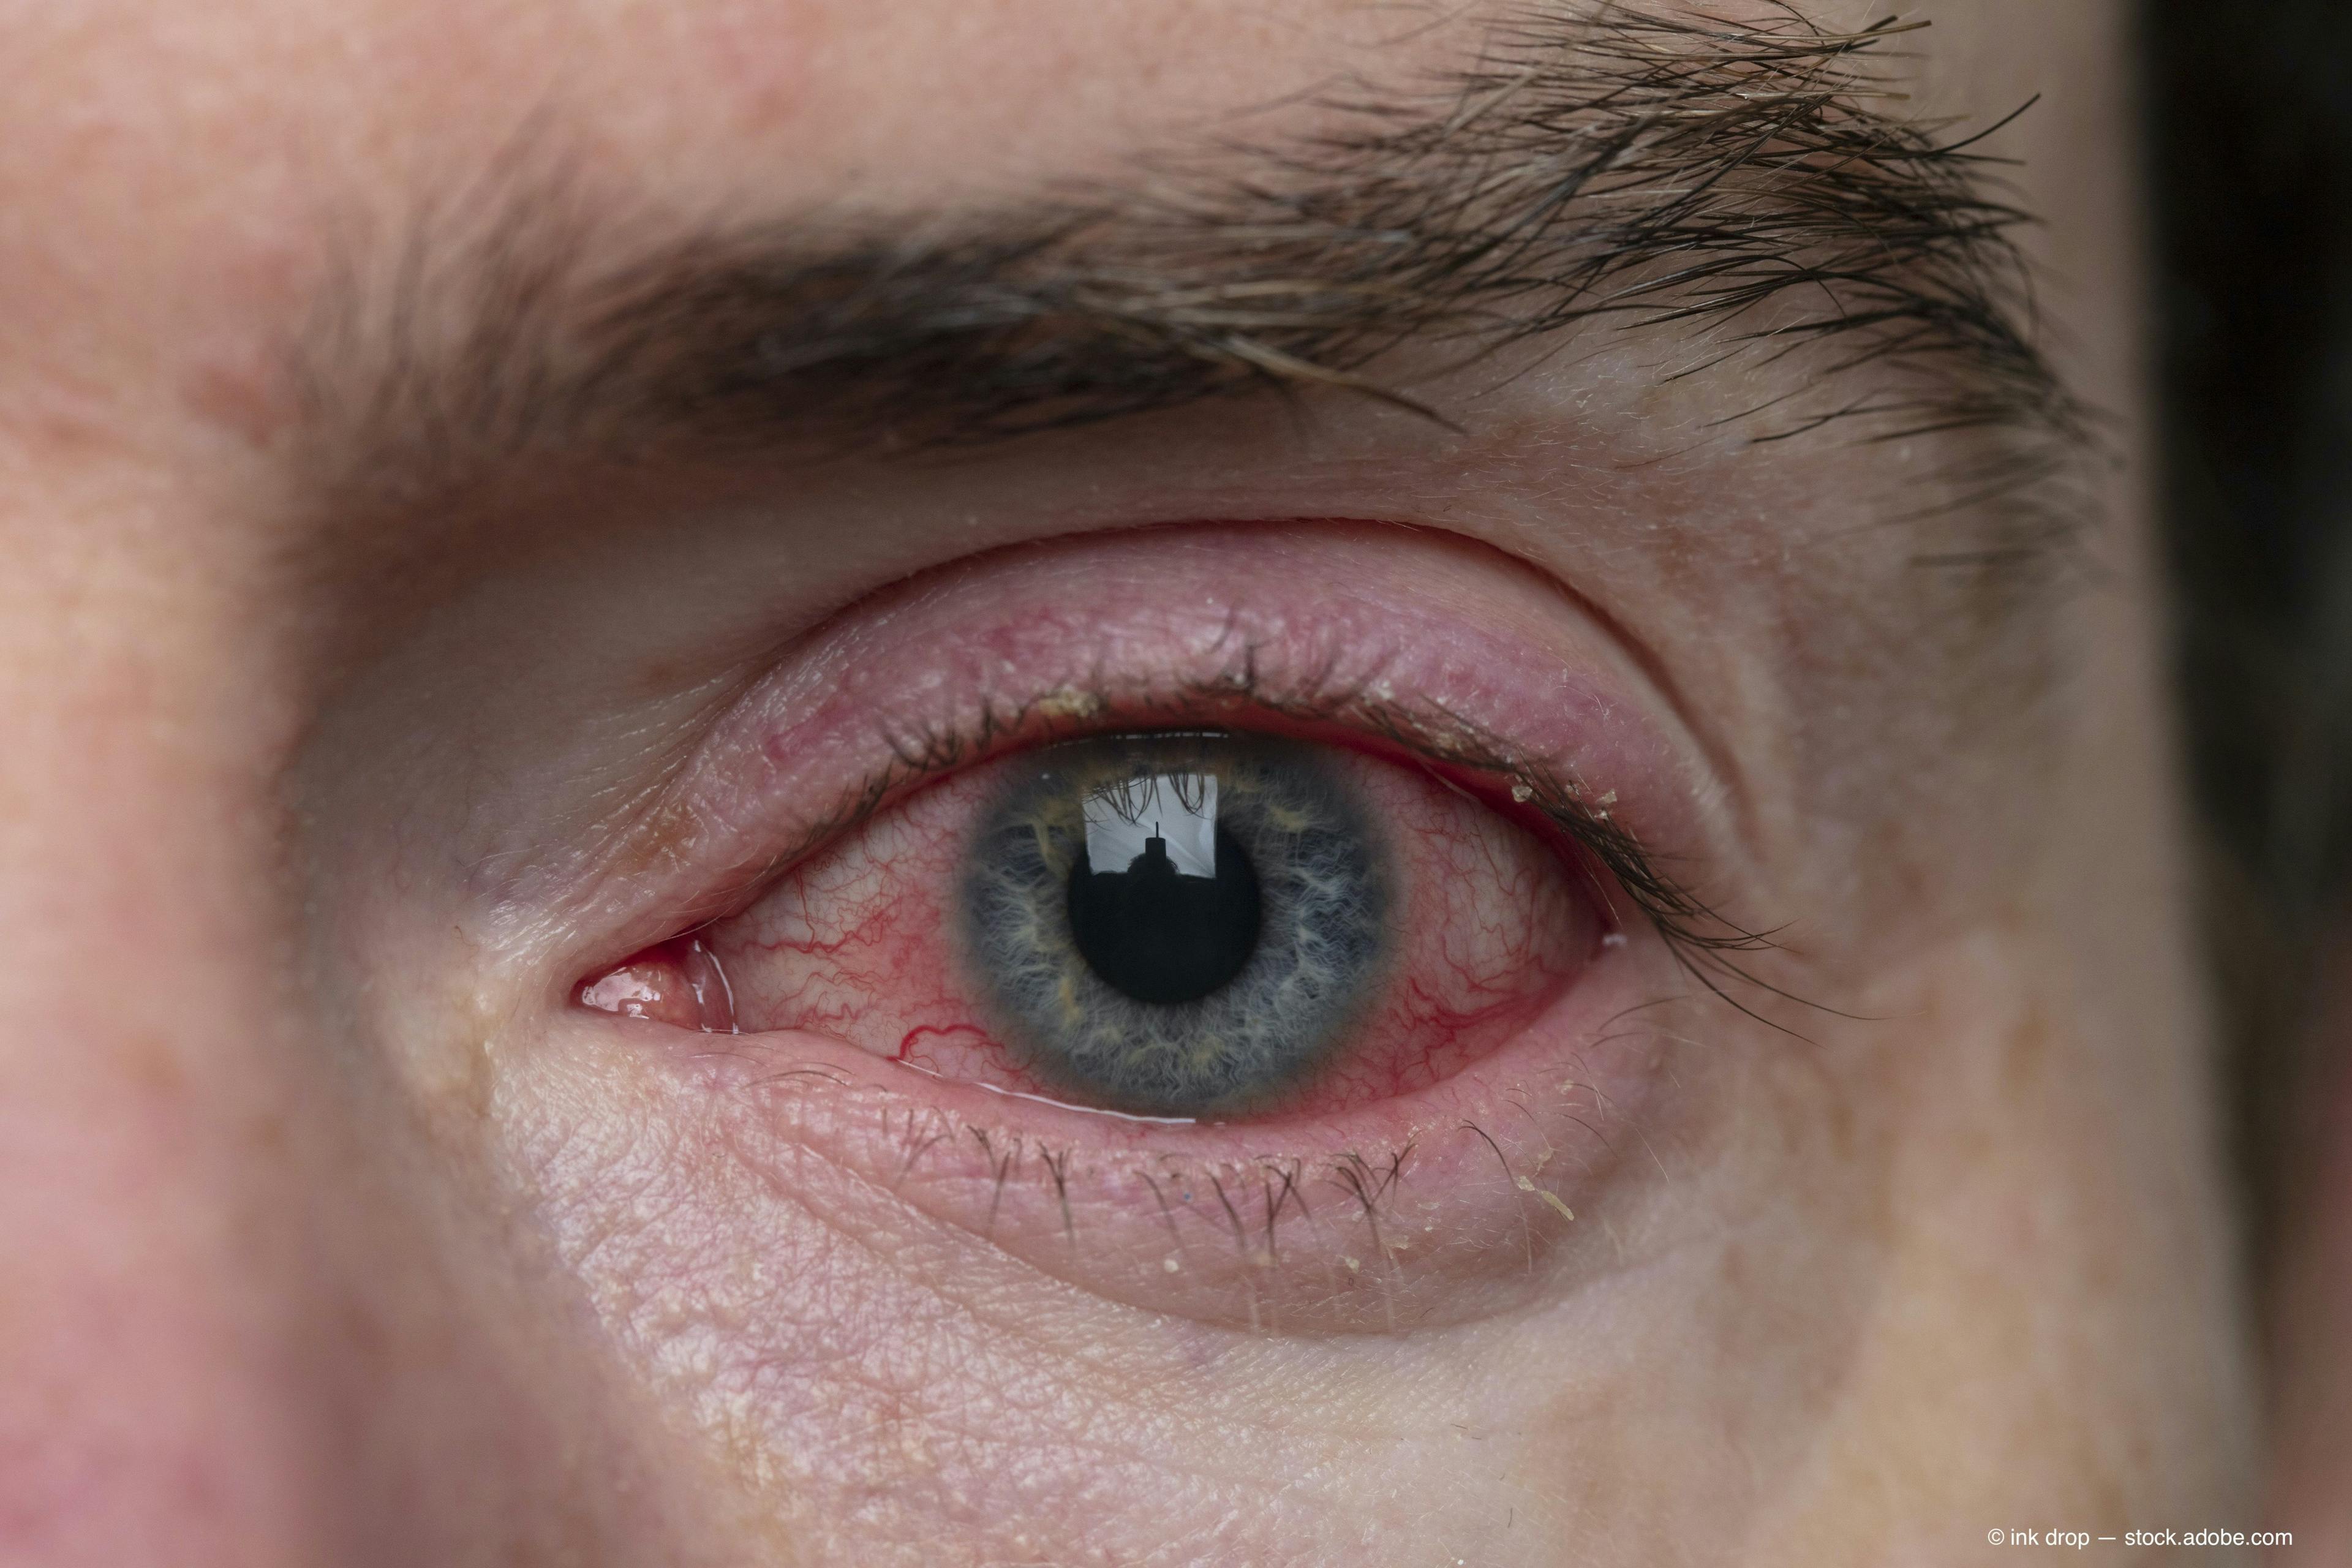 pink eye has been found to be a symptom of coronavirus